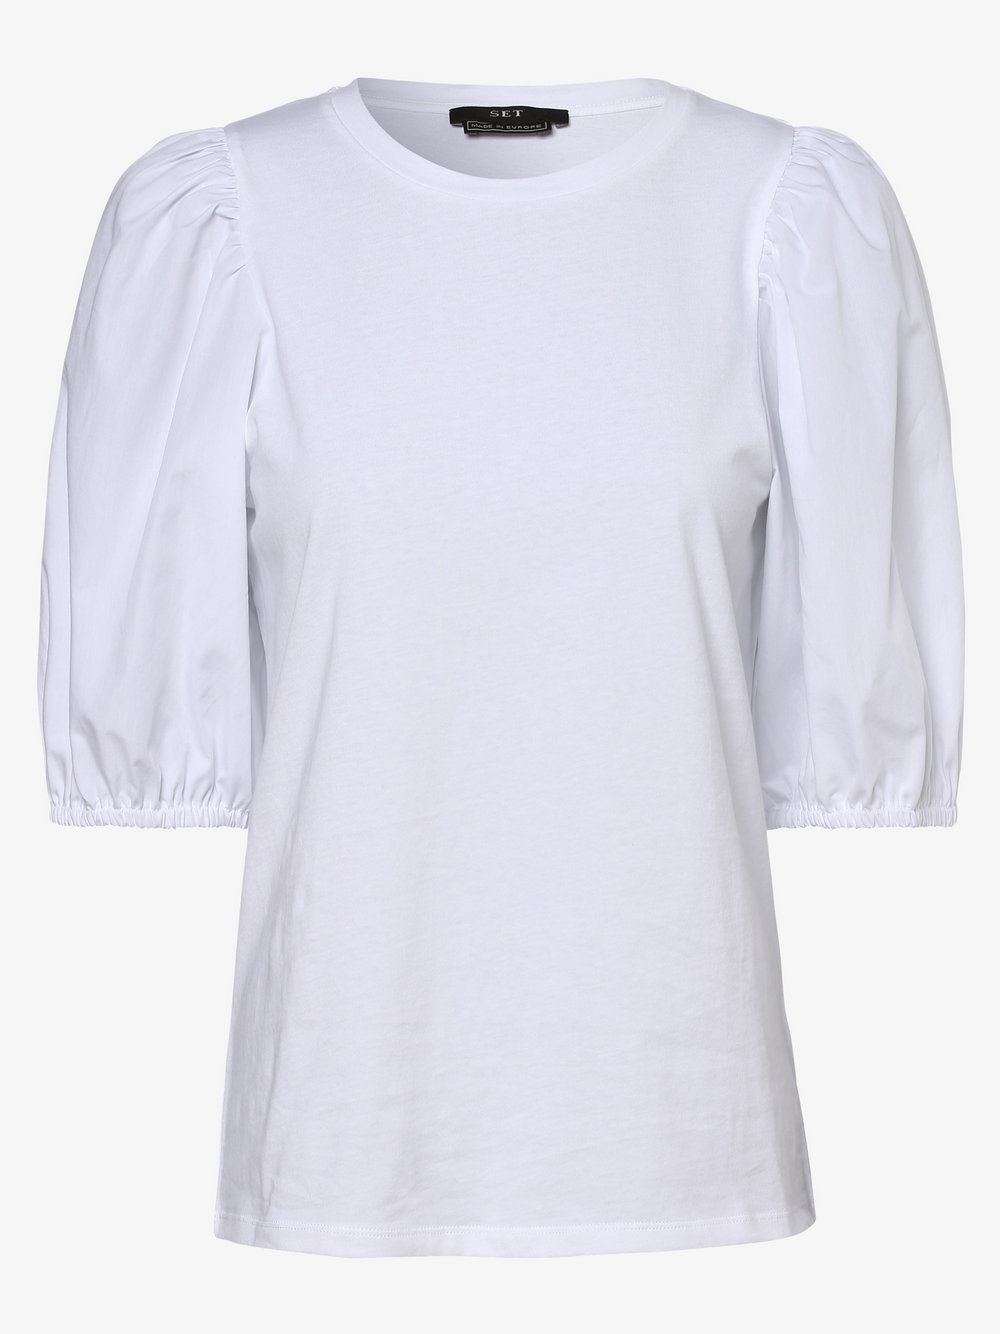 SET - Koszulka damska, biały